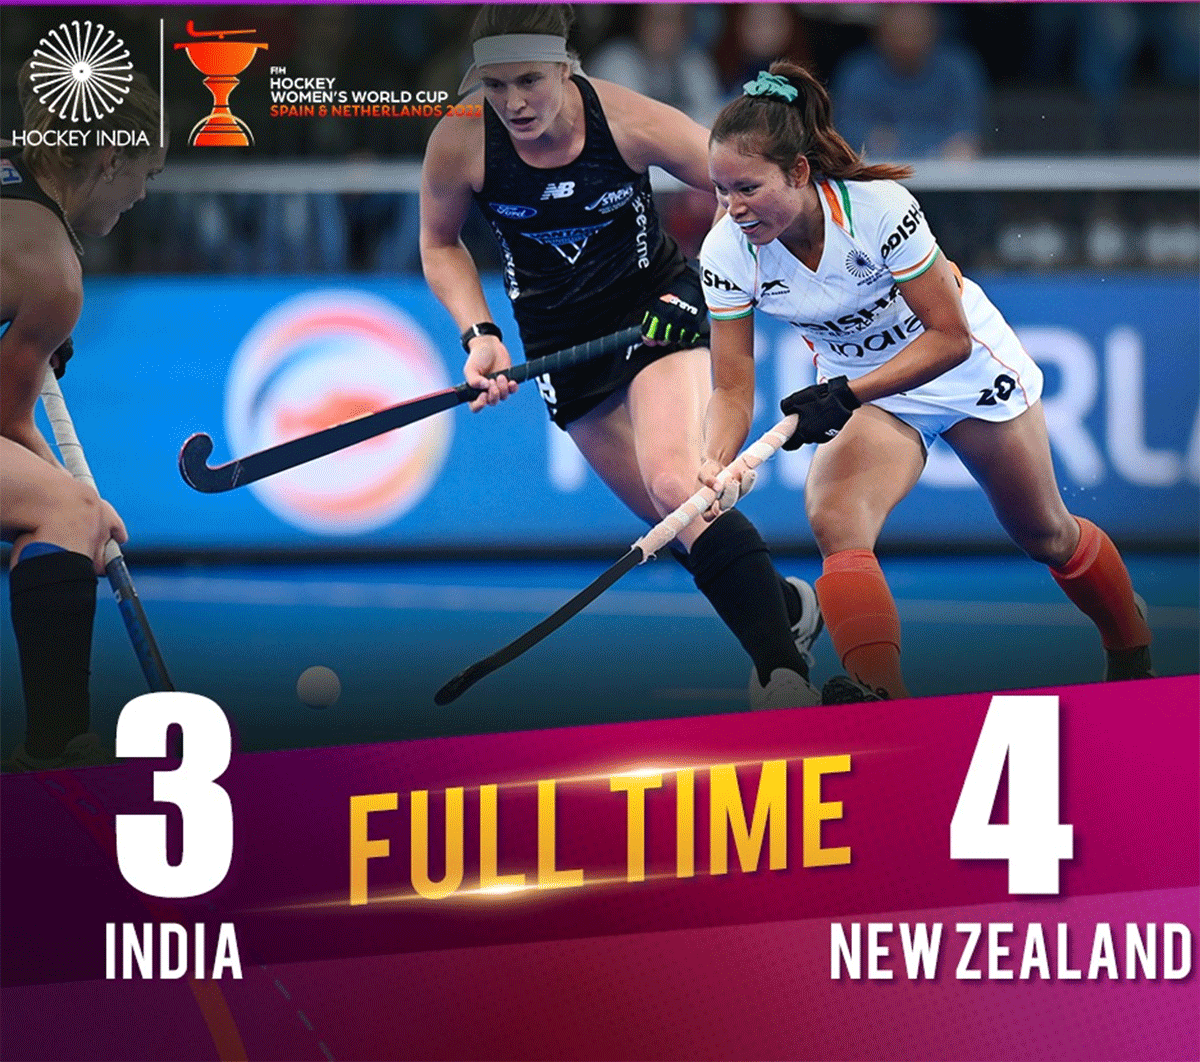 Women's hockey World Cup result: New Zealand beat India 3-4 